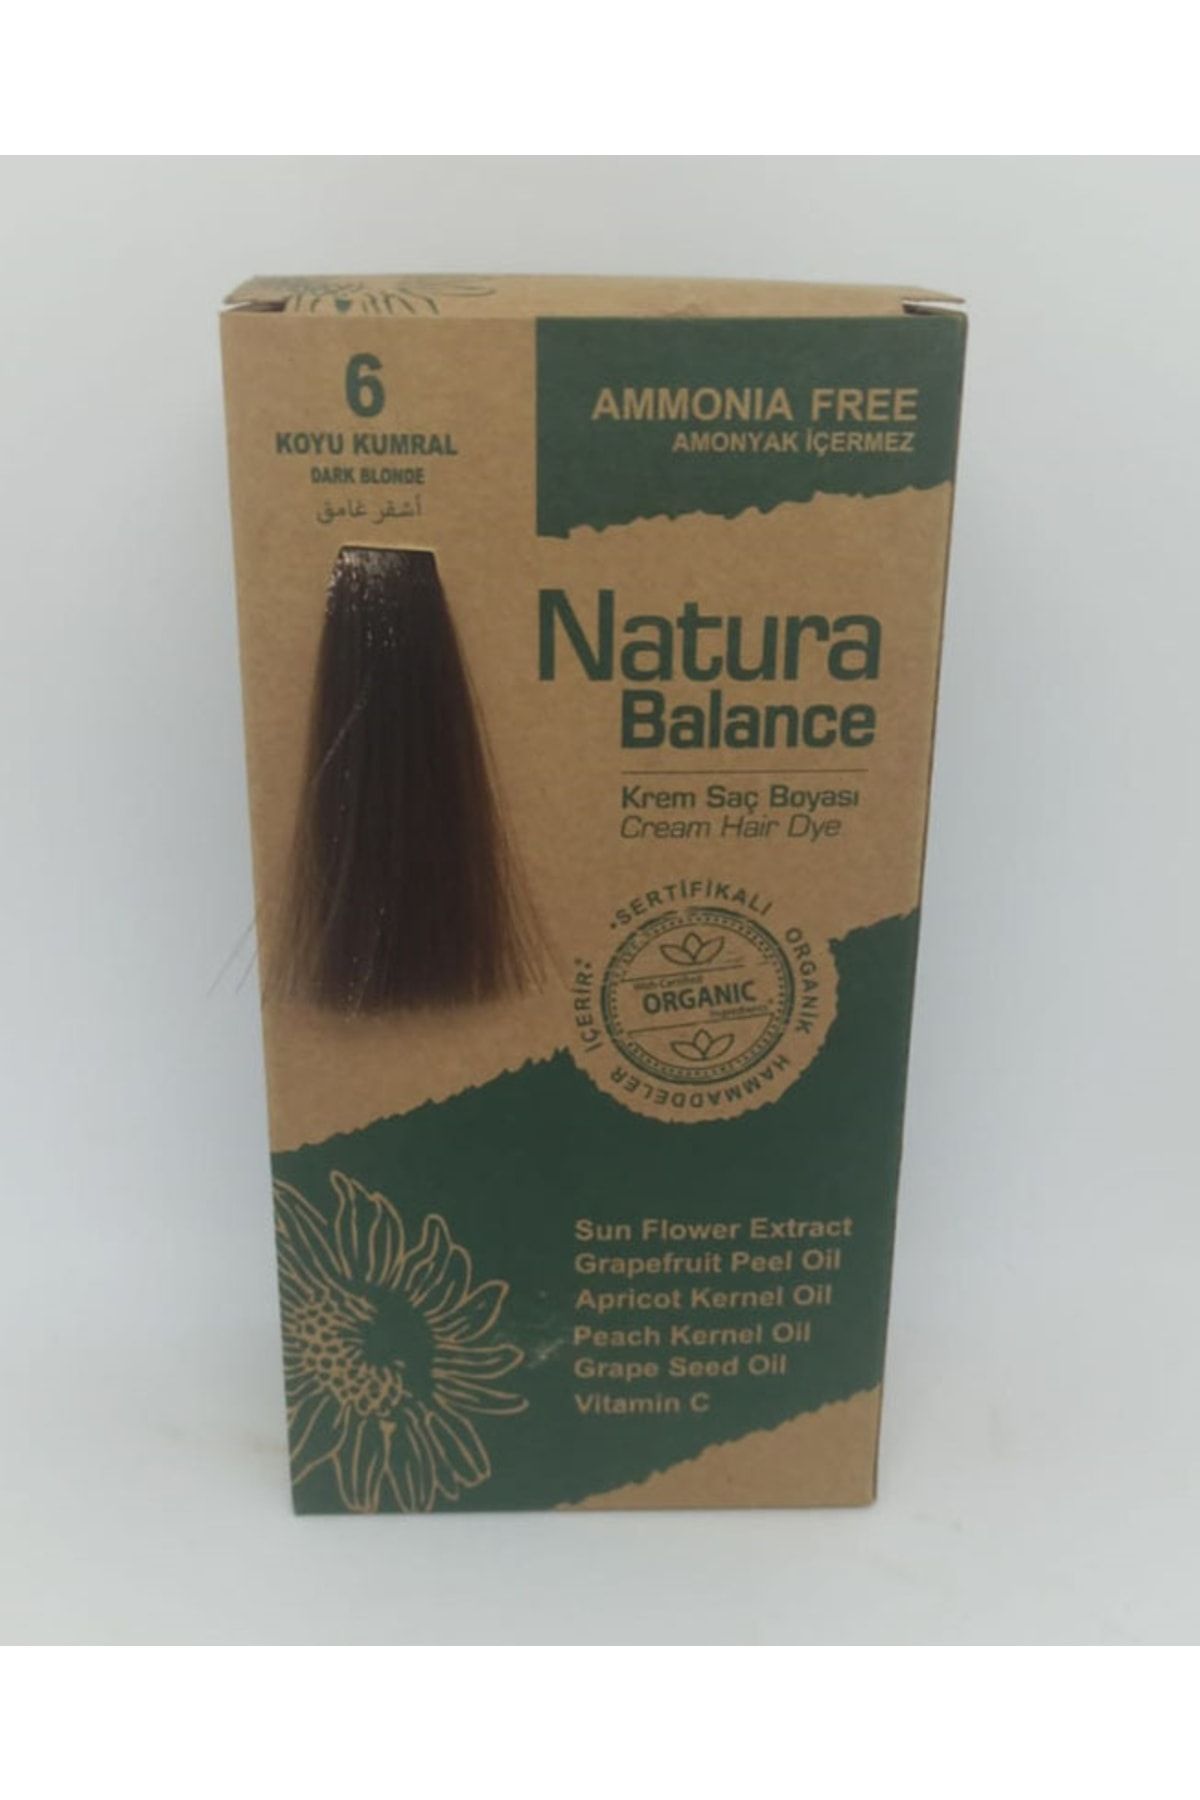 NATURABALANCE Natura Balance Organik Saç Boyası Seti Koyu Kumral